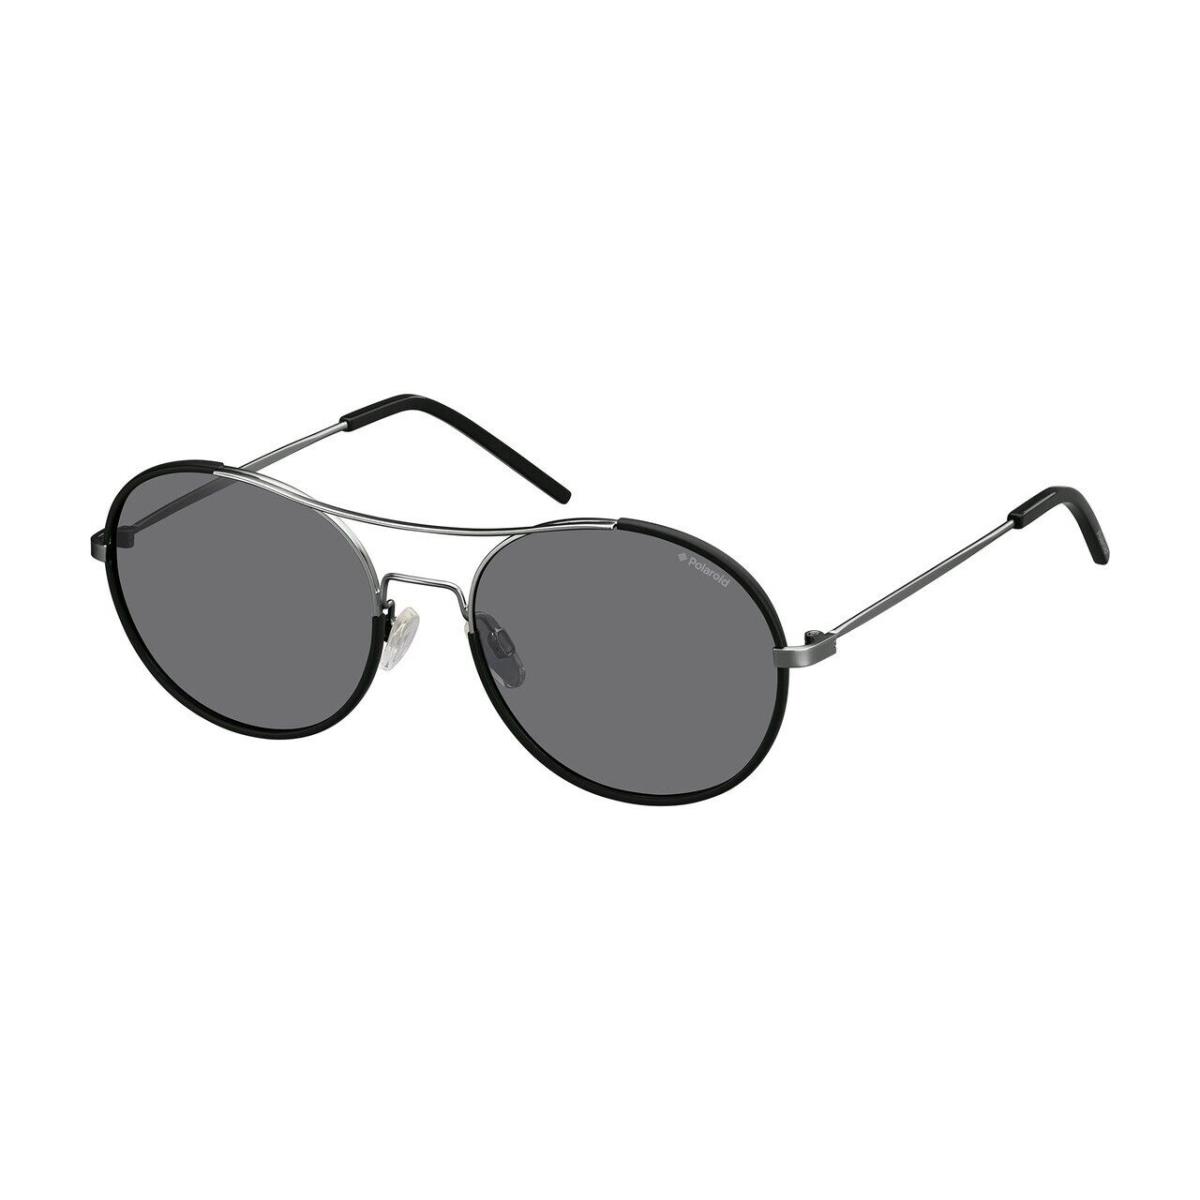 Unisex Sunglasses Polaroid Pld 1021 S KJ1 Y2 Polarized - Size 55 - Frame: gunmetal black, Lens: